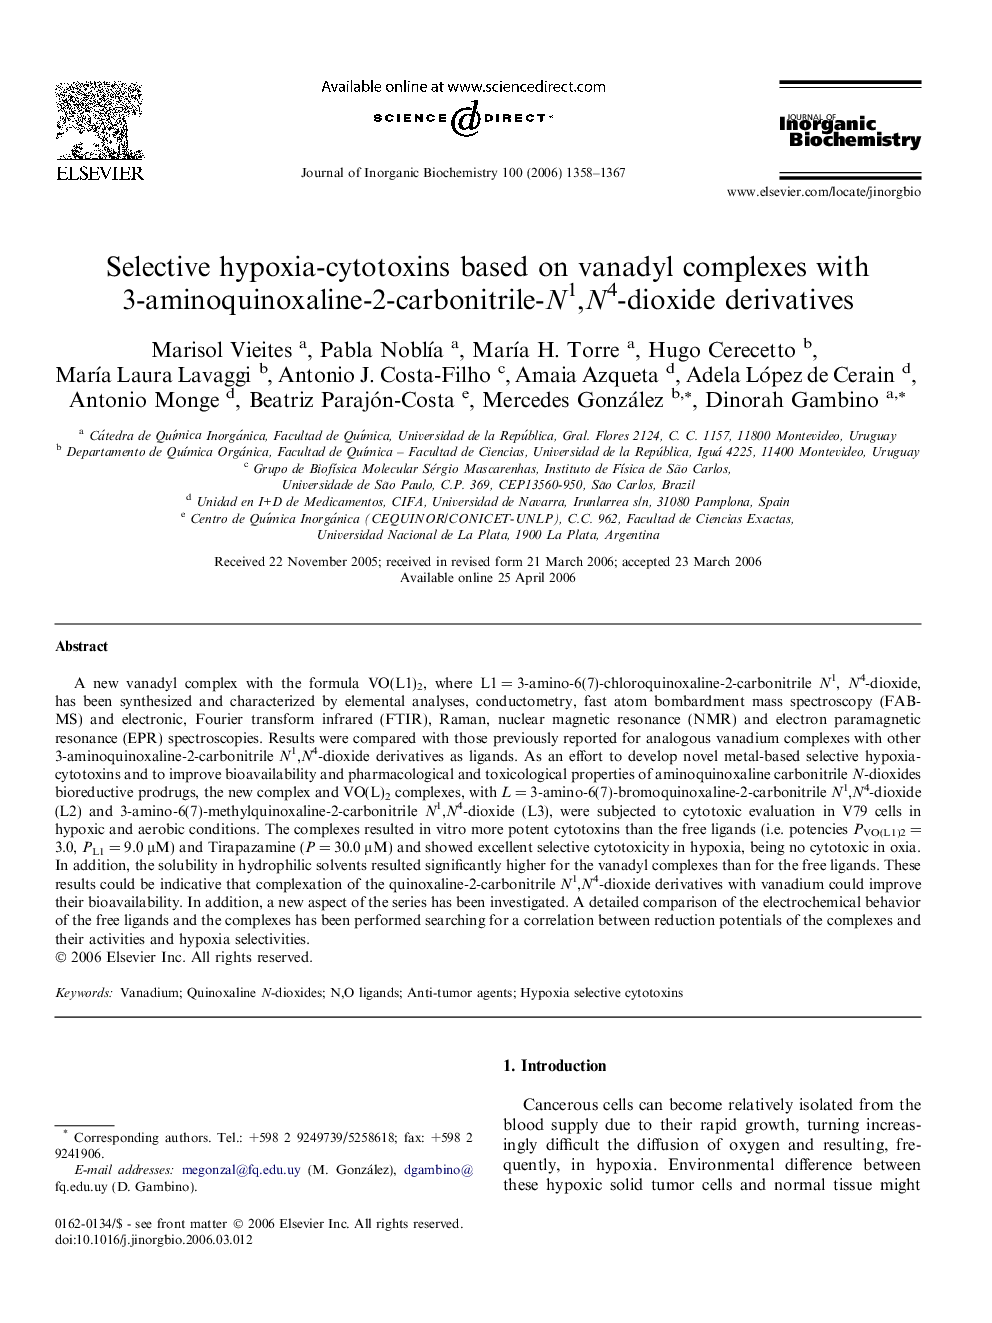 Selective hypoxia-cytotoxins based on vanadyl complexes with 3-aminoquinoxaline-2-carbonitrile-N1,N4-dioxide derivatives